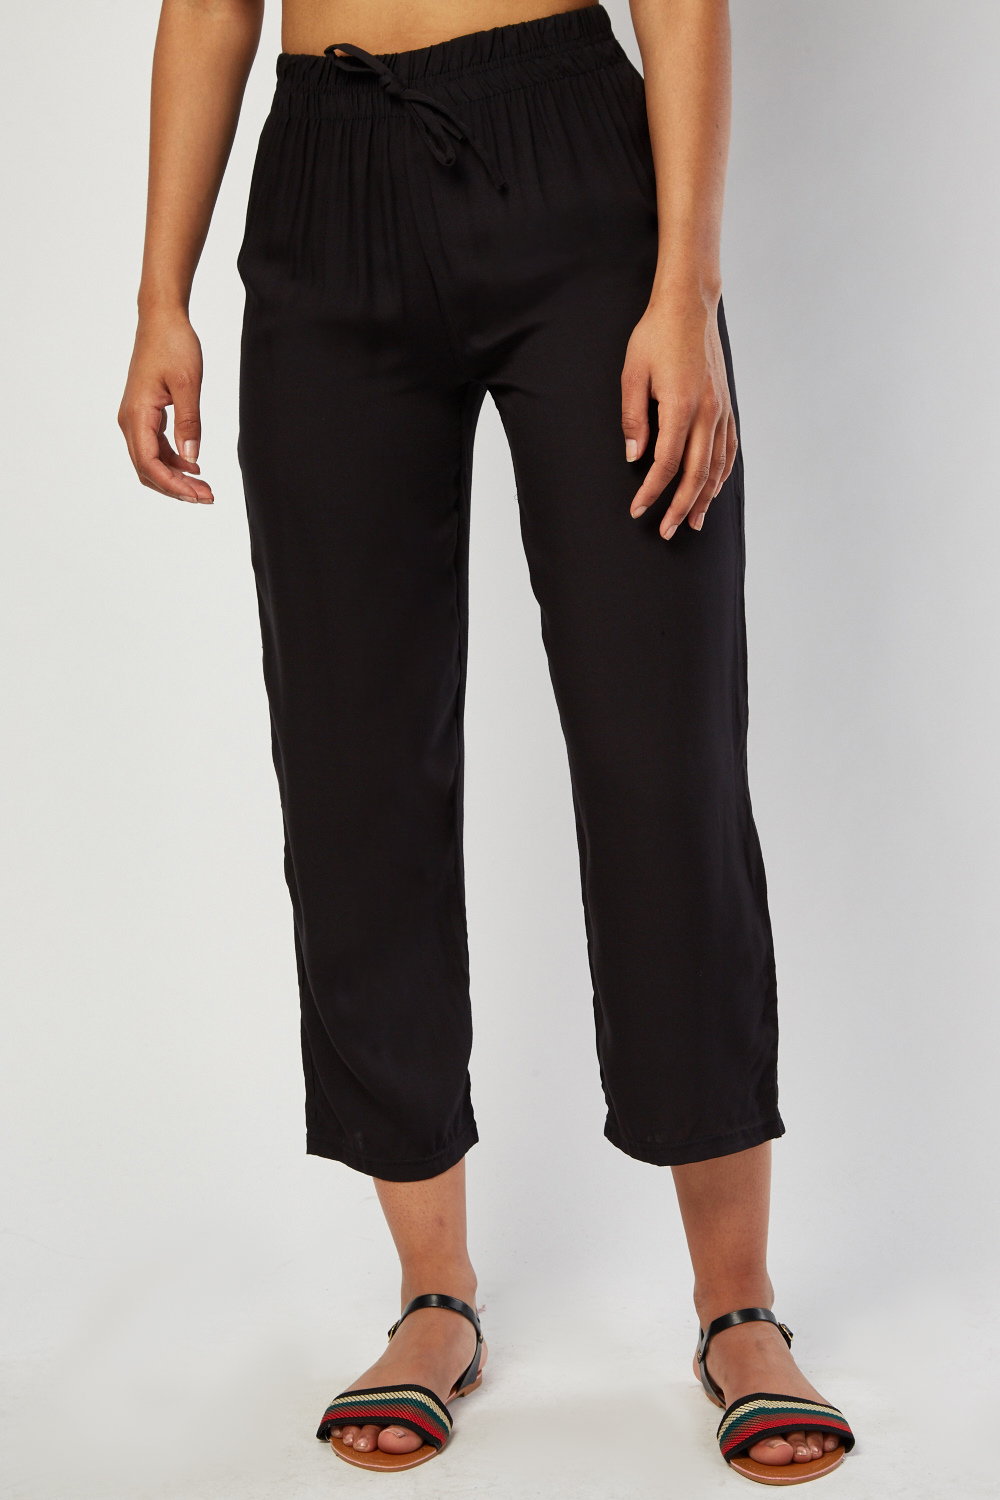 Sheer Crop Length Trousers - Just $7